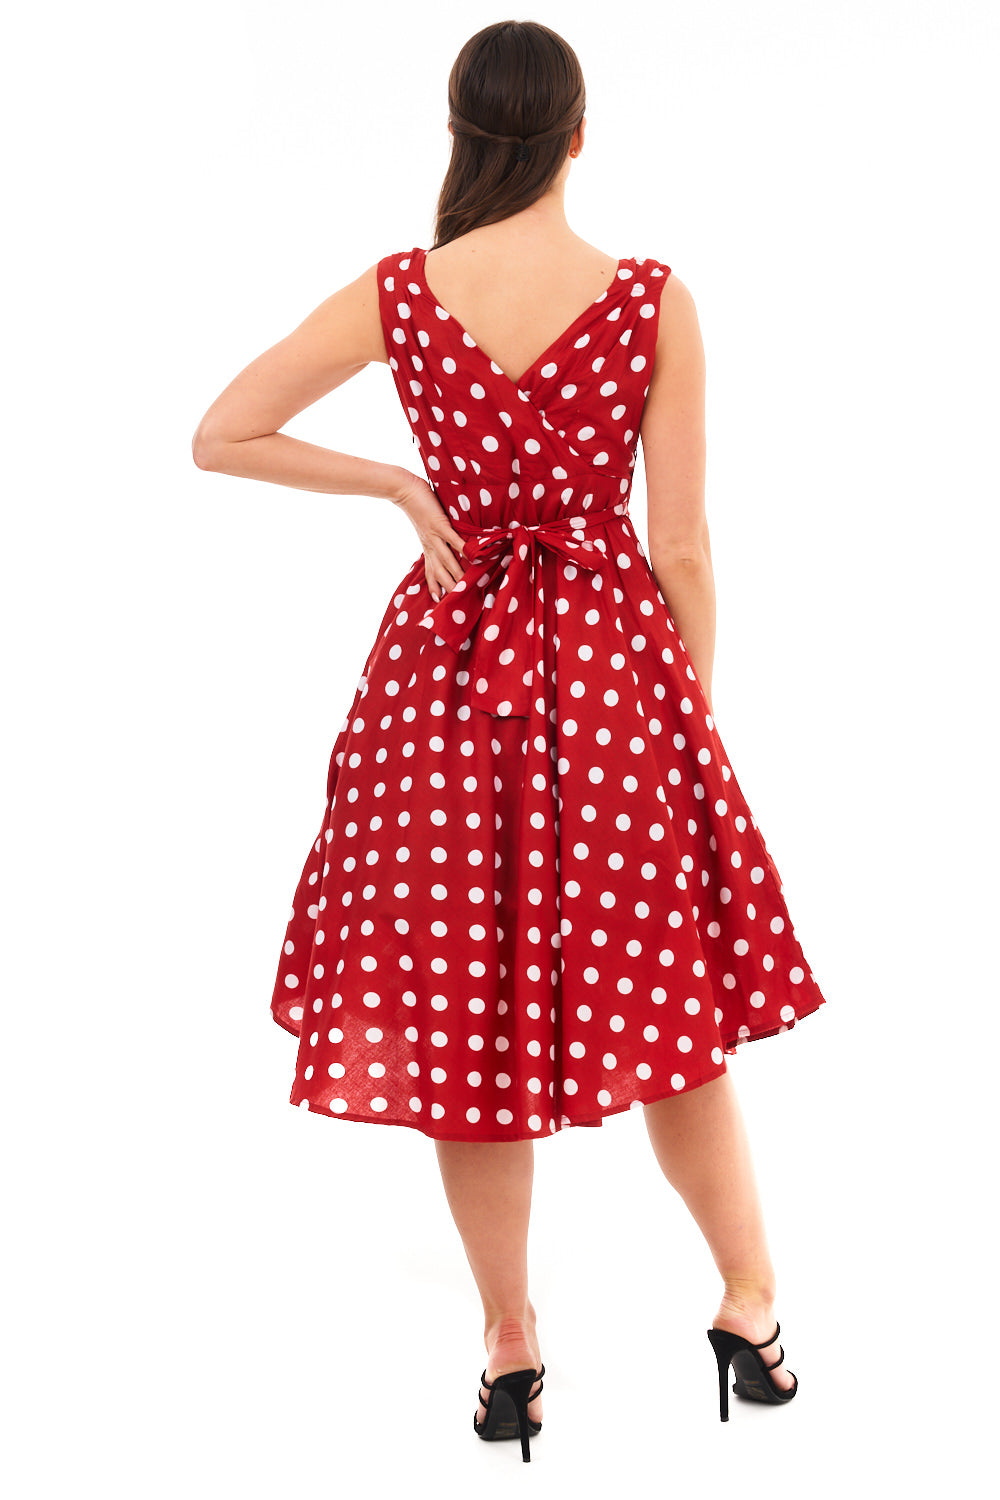 Ladies Retro Vintage 1950's Rockabilly Swing Polka Dot Dress in Red